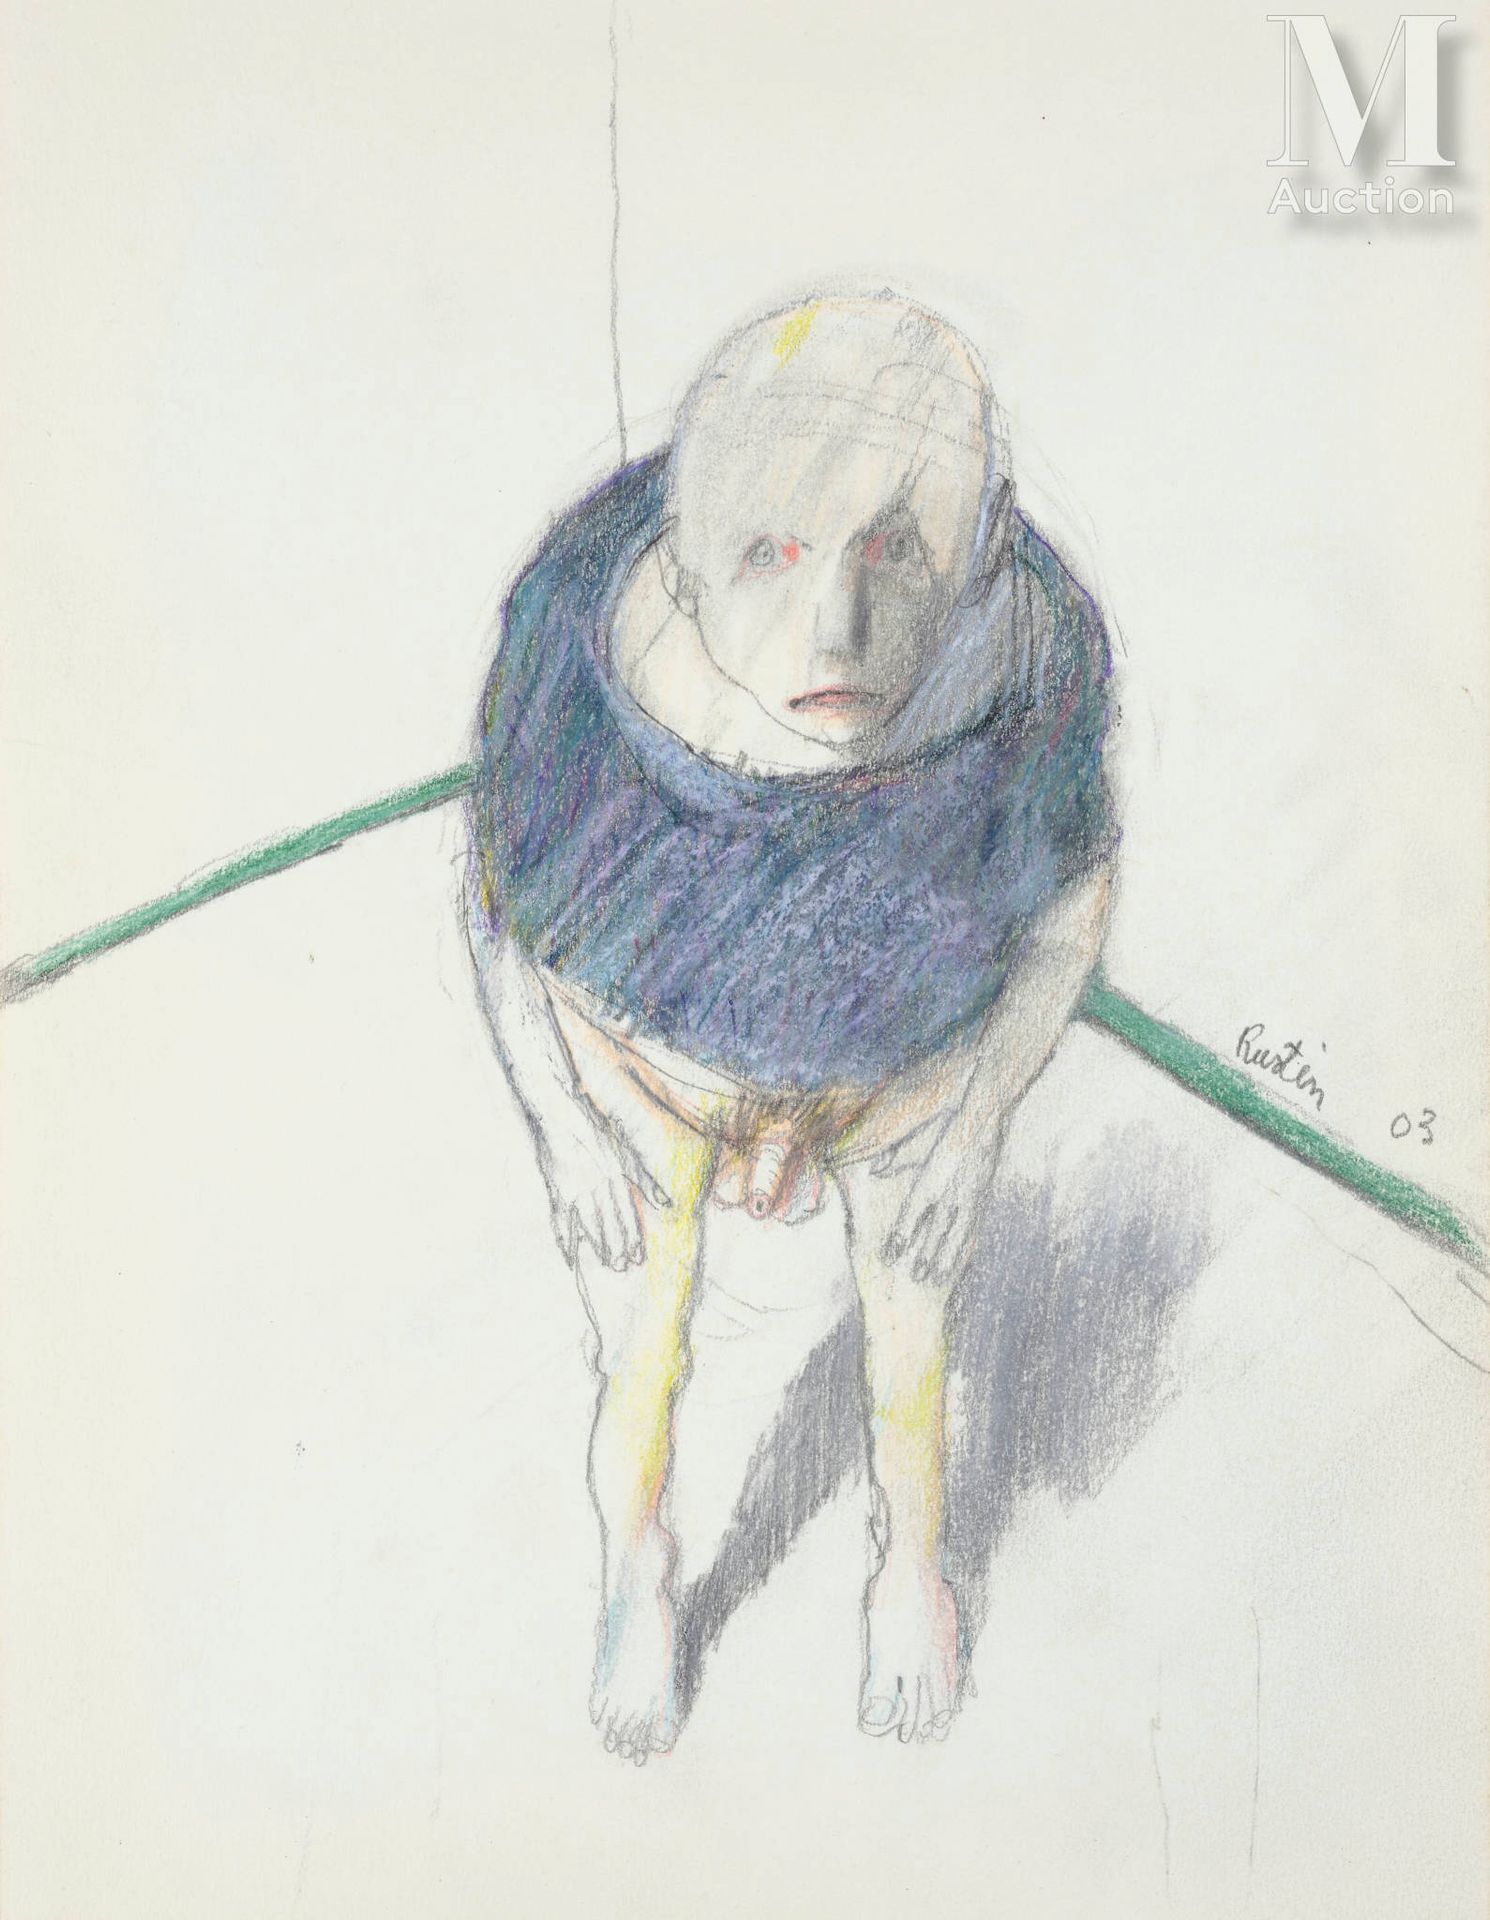 Jean RUSTIN (1928-2013) 无题，2003 年

纸上铅笔和彩色铅笔，右侧有签名和日期
31.5 x 24 厘米

出处 ：
私人收藏，巴黎